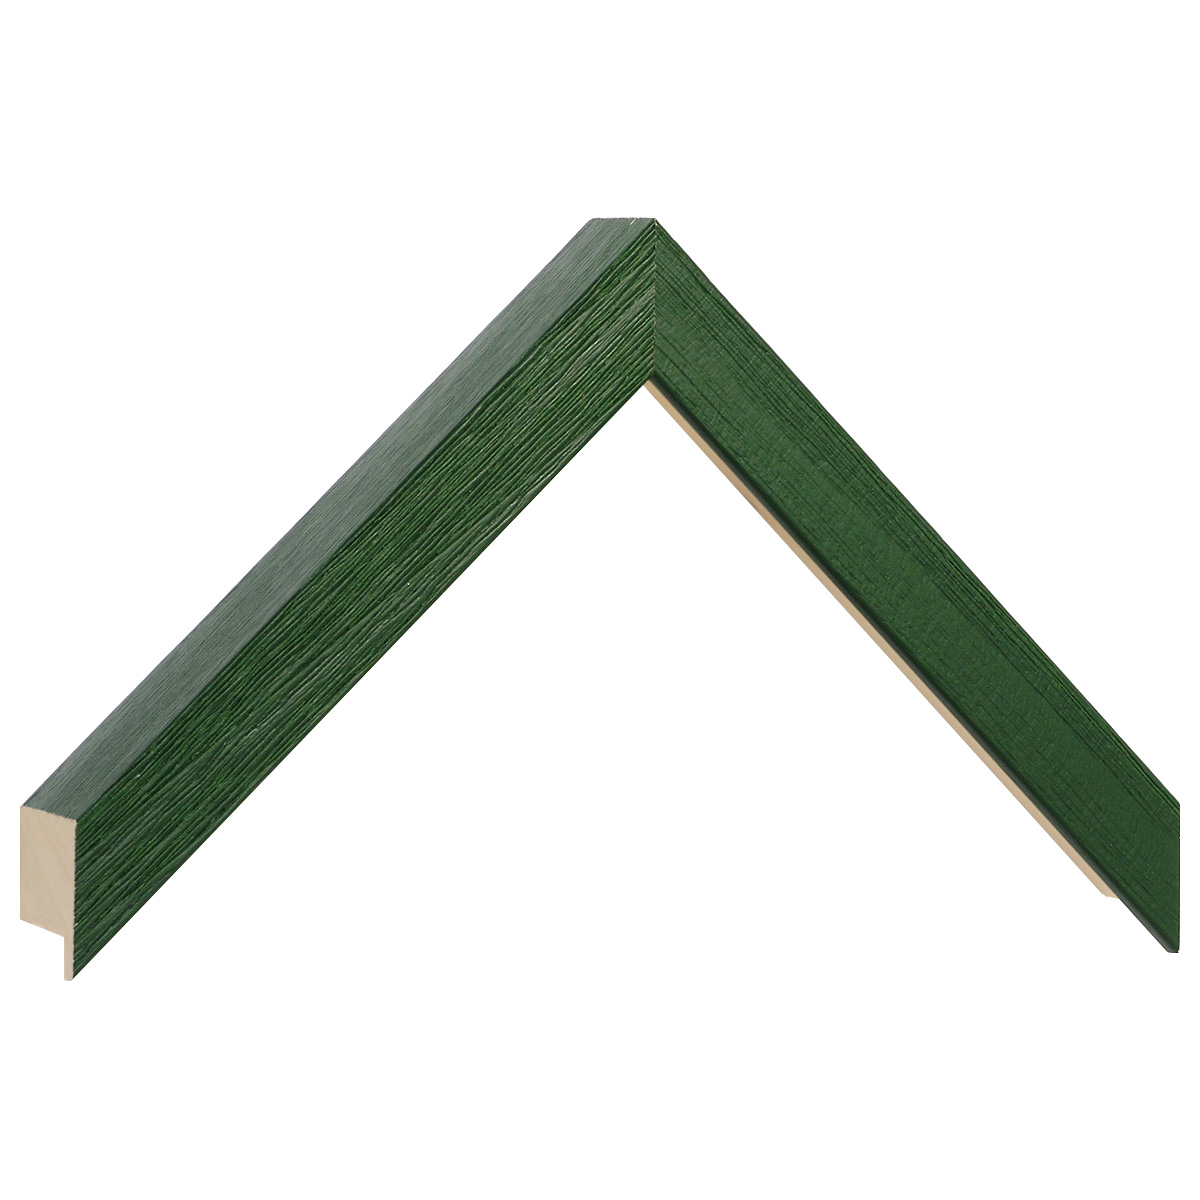 Profil ayous plat Lățime 20 mm Înălțime 32 - verde mat - Mostră